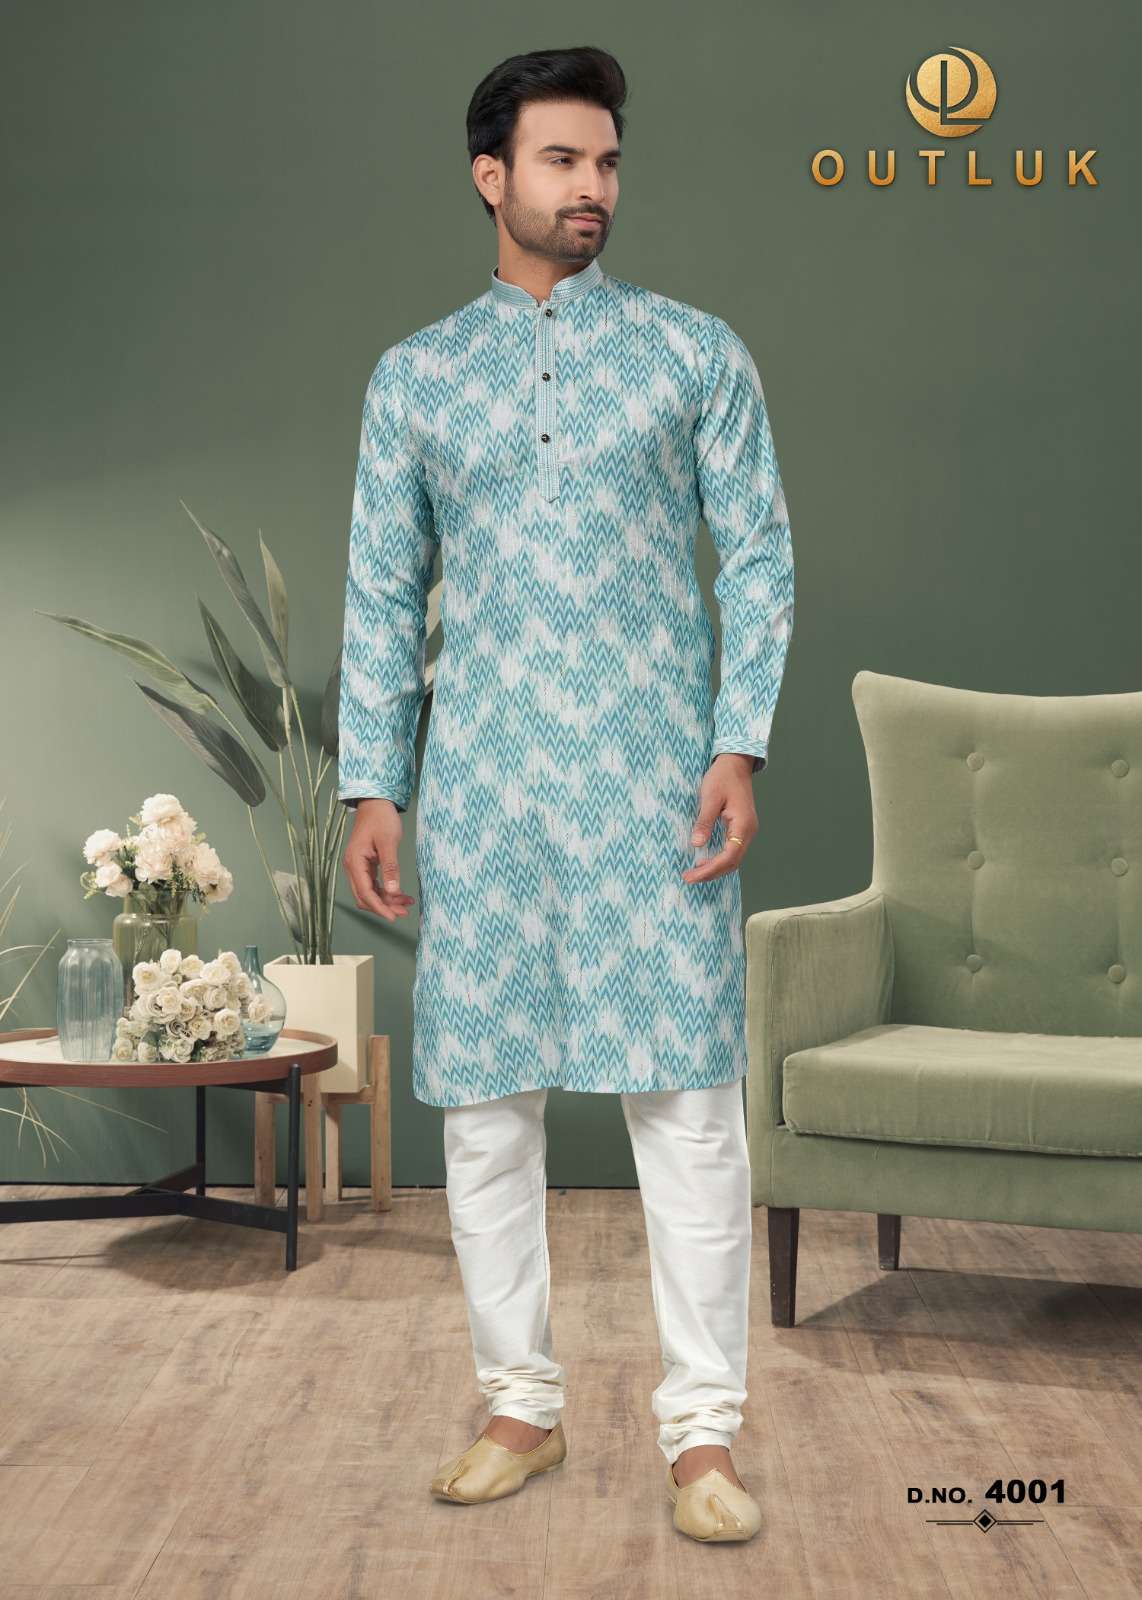 mens wear kurta pyjama outluk added wedding collection series new designs in pintex work kurta pajama catalogue name outluk wedding collection vol 4 